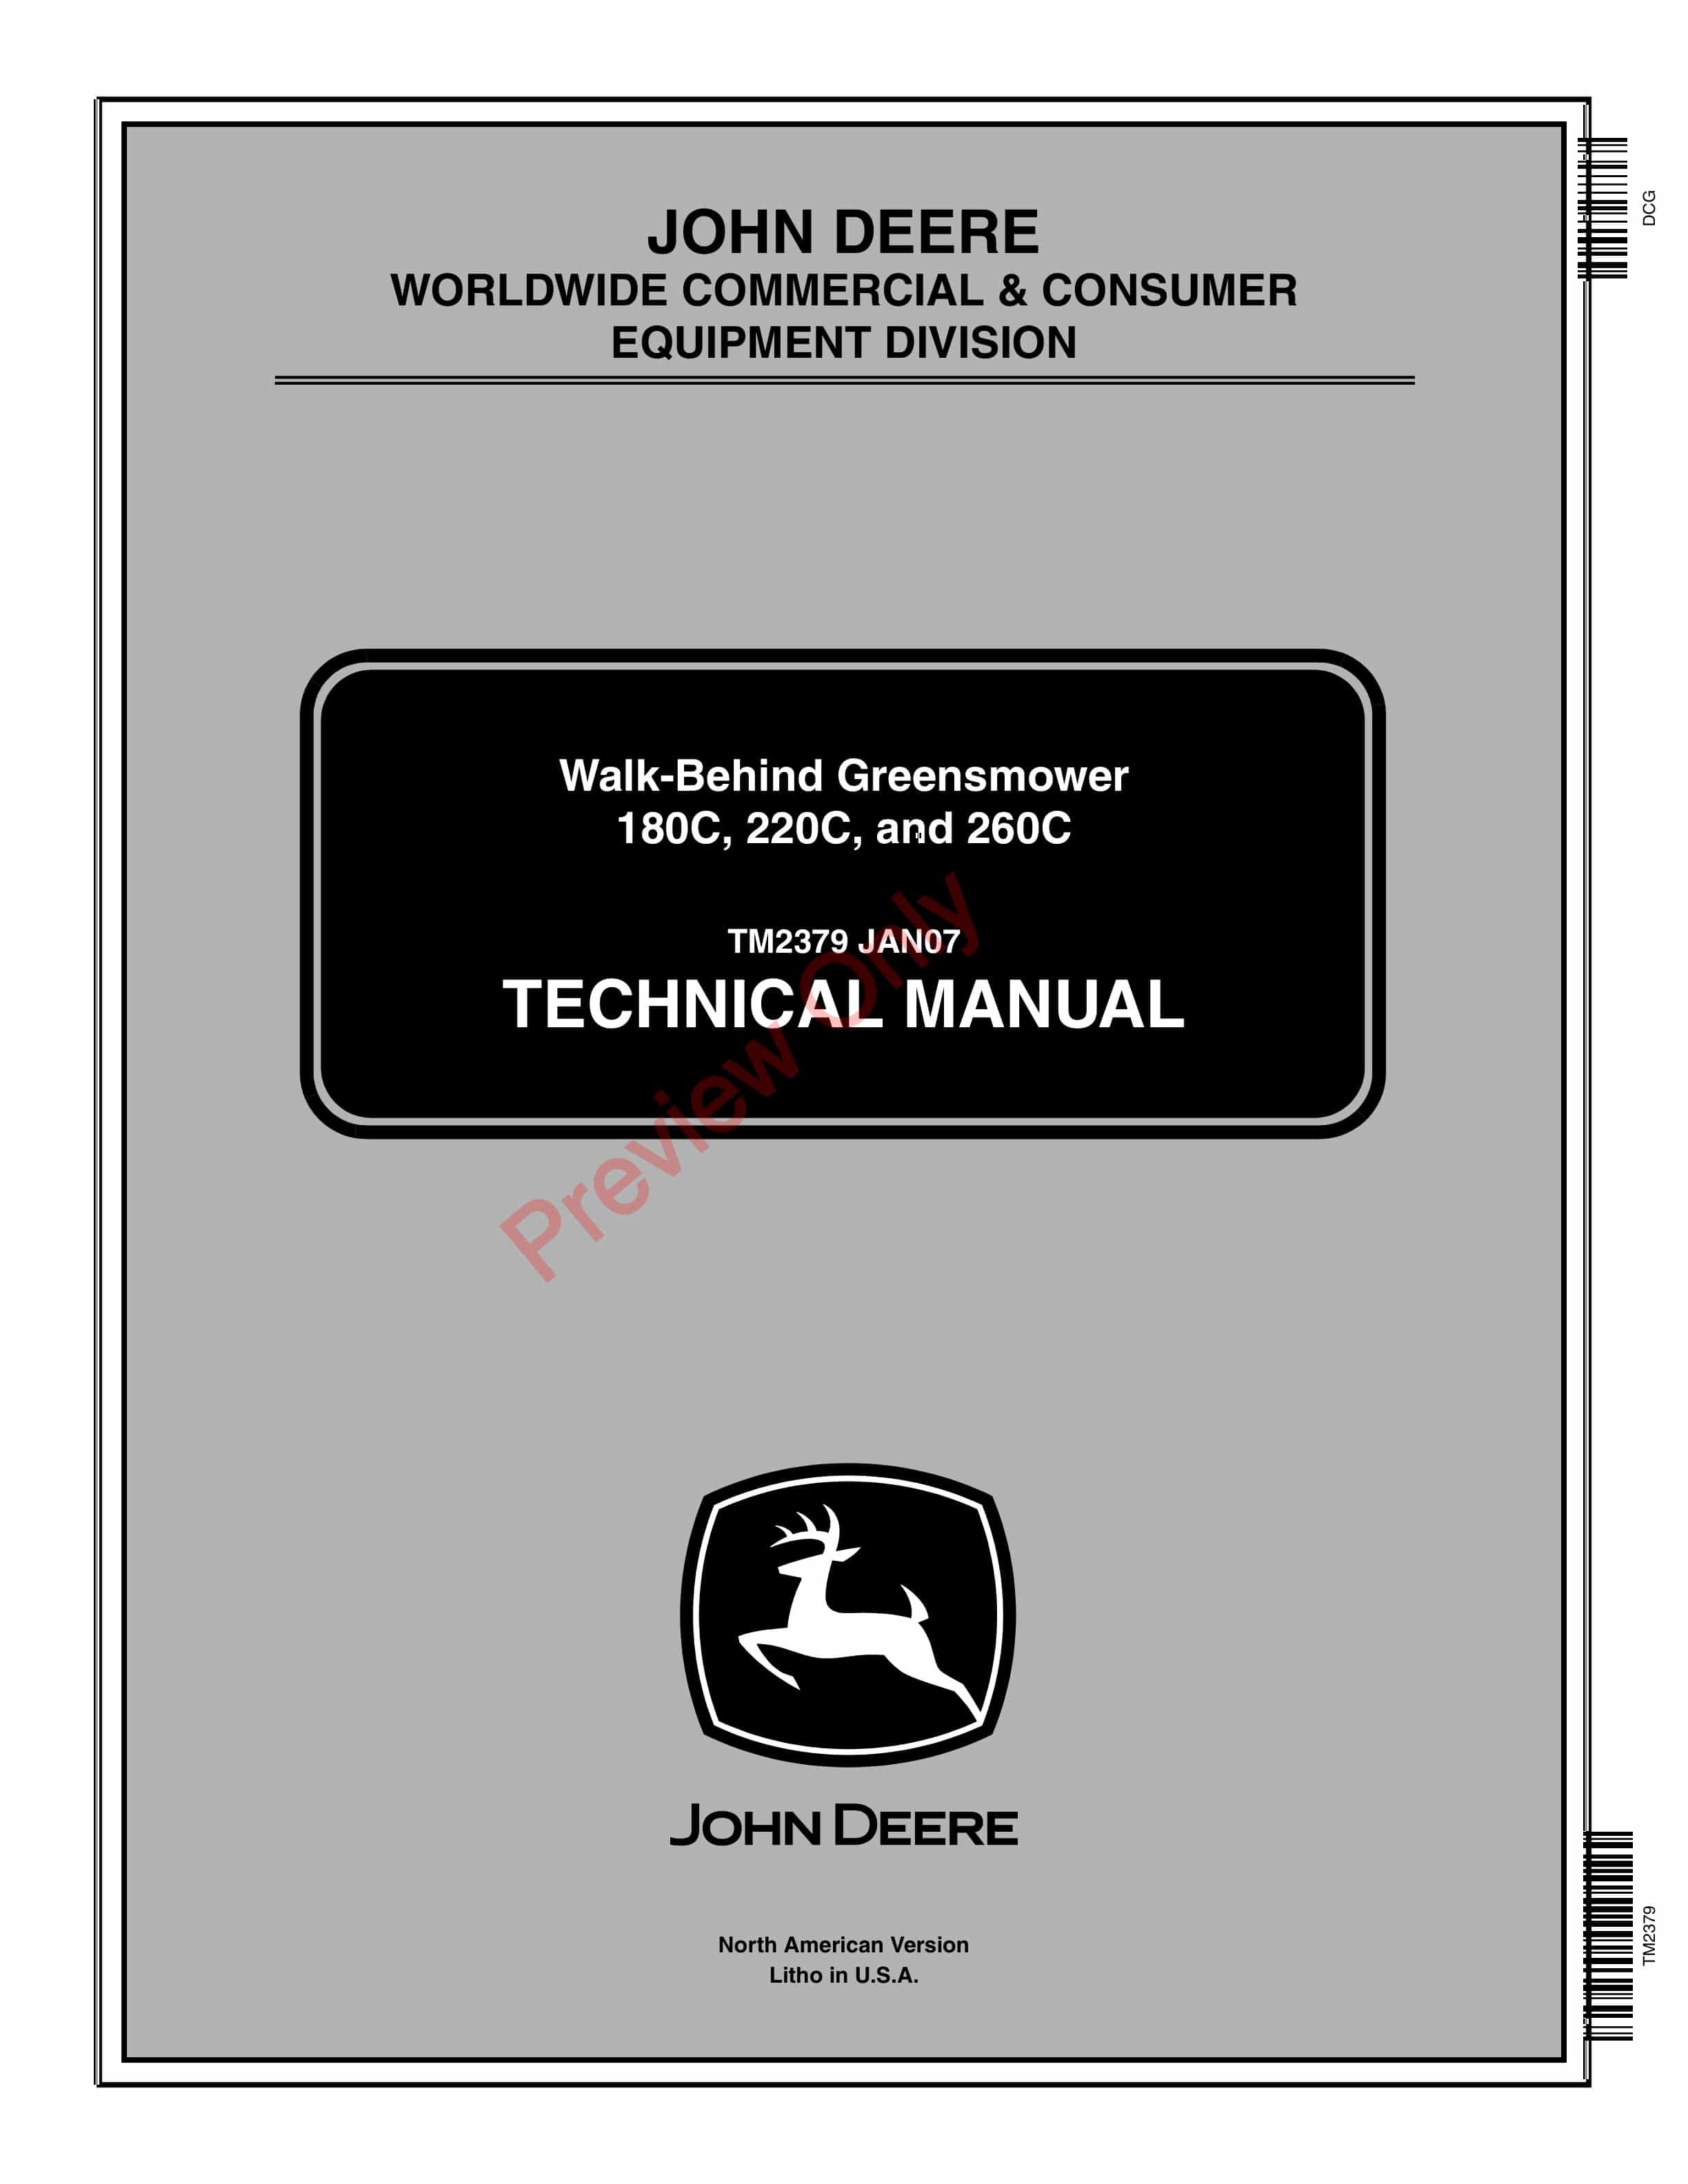 John Deere 180C 220C 260C Walk Behind Greensmower Technical Manual TM2379 01JAN07 1